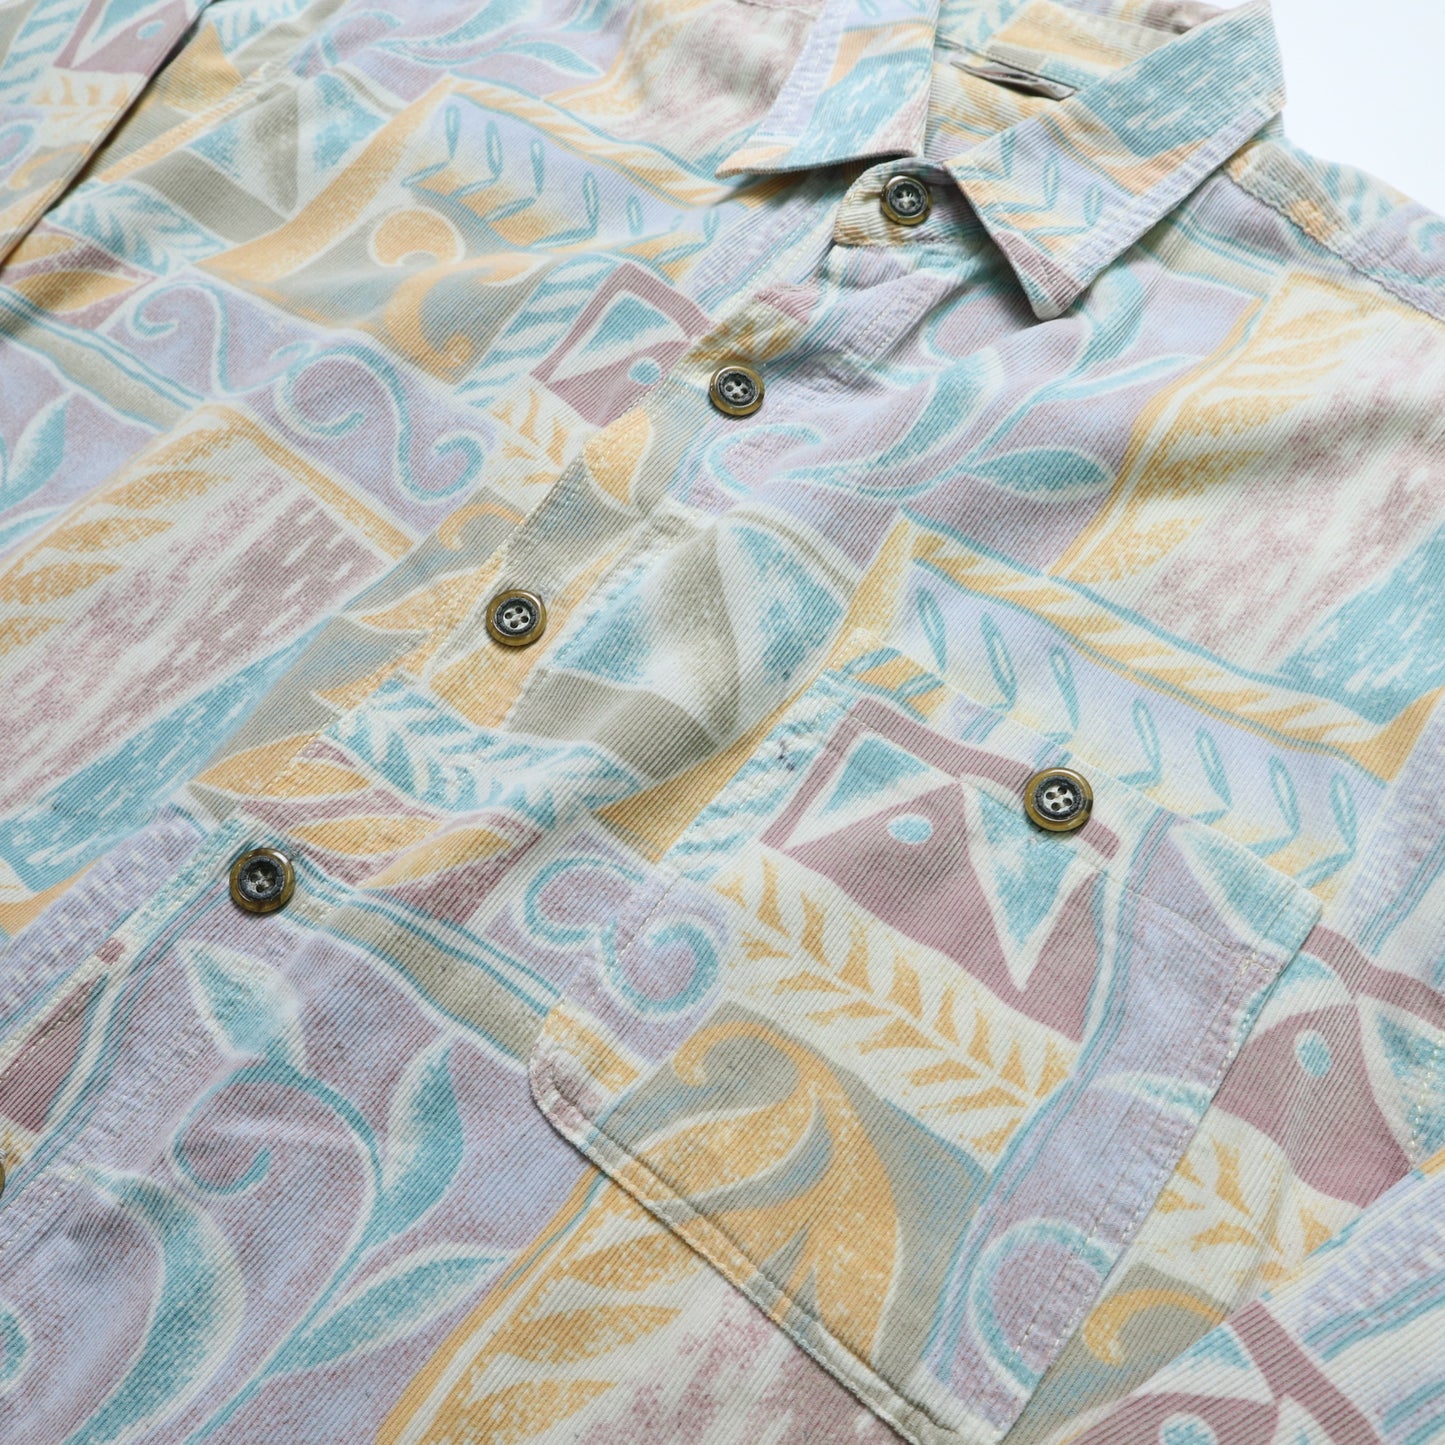 geometric pattern corduroy shirt vintage shirt